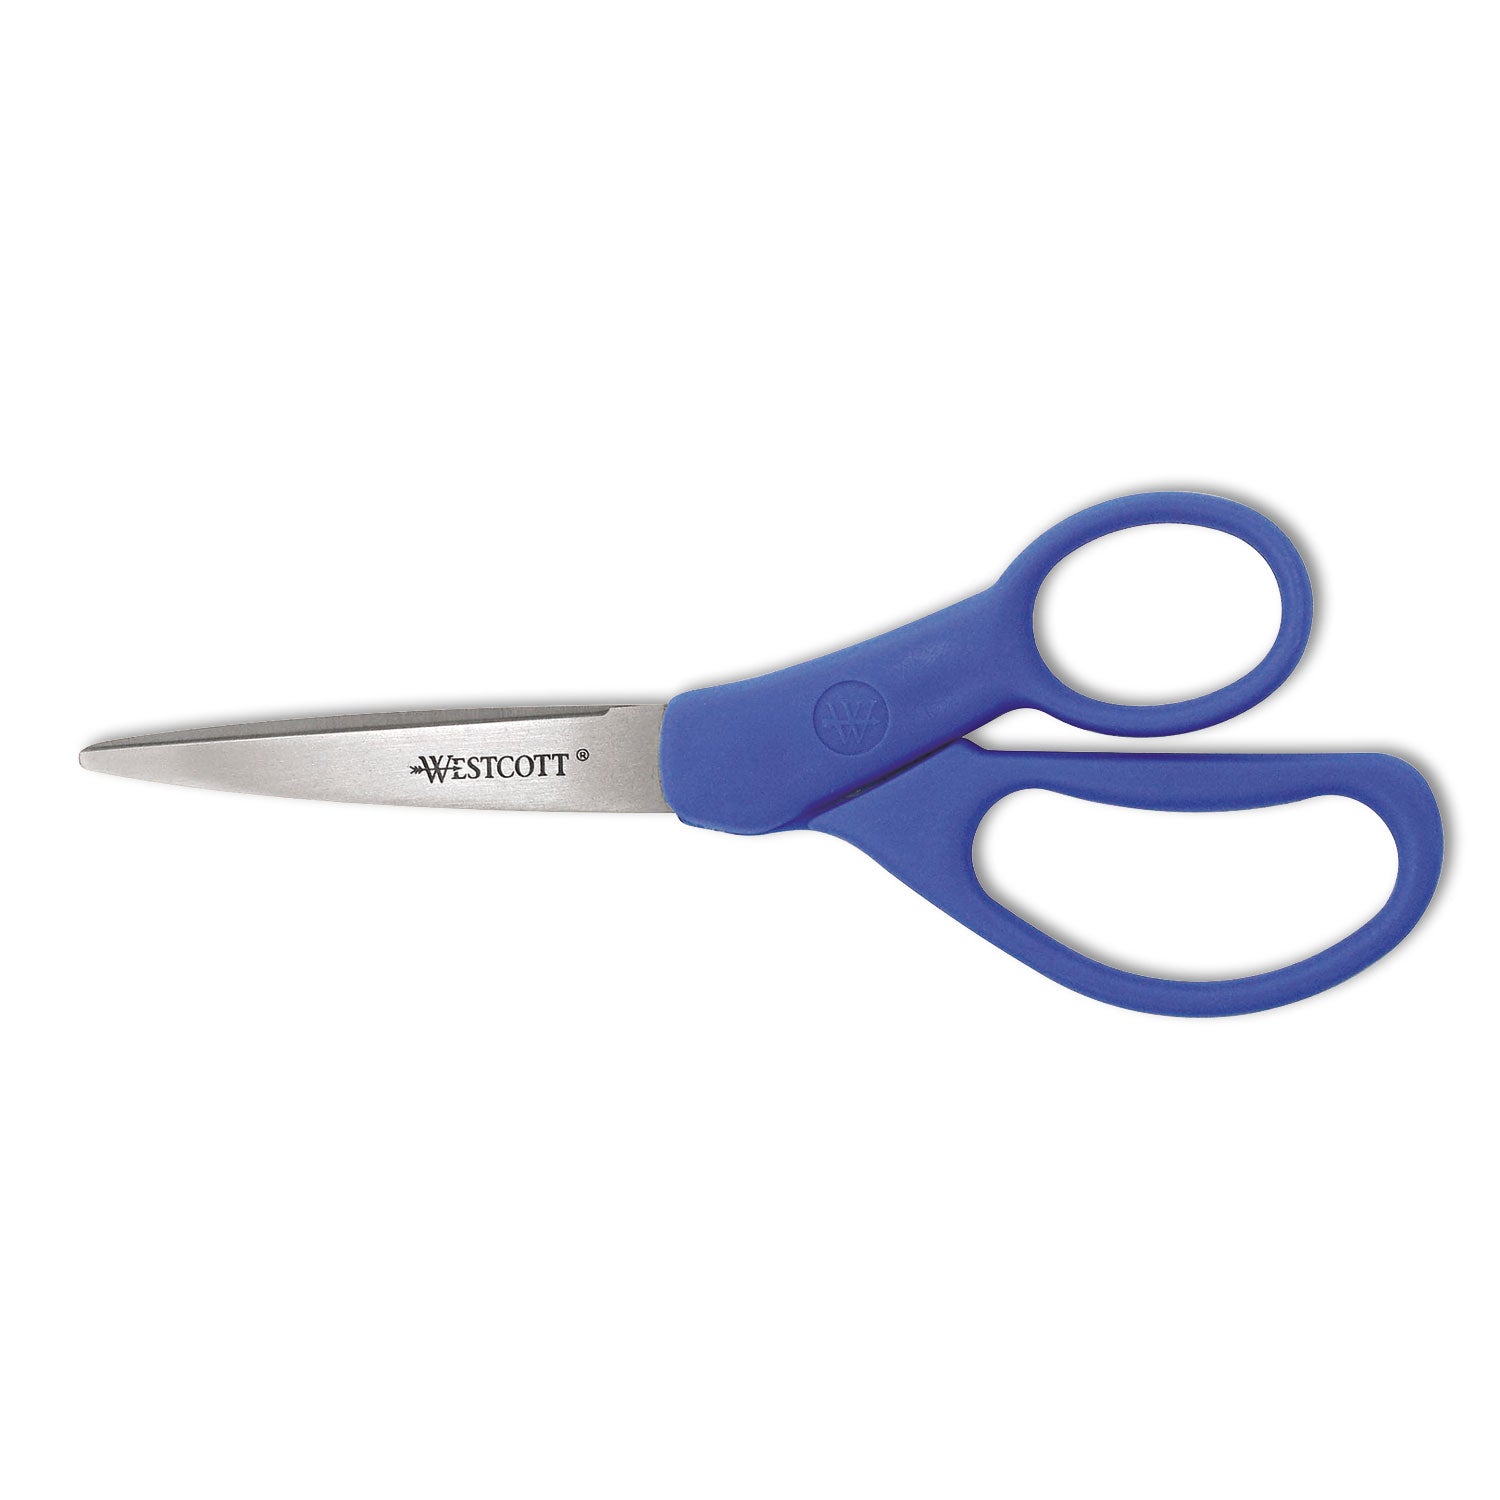 Preferred Line Stainless Steel Scissors, 7" Long, 3.25" Cut Length, Blue Offset Handle - 